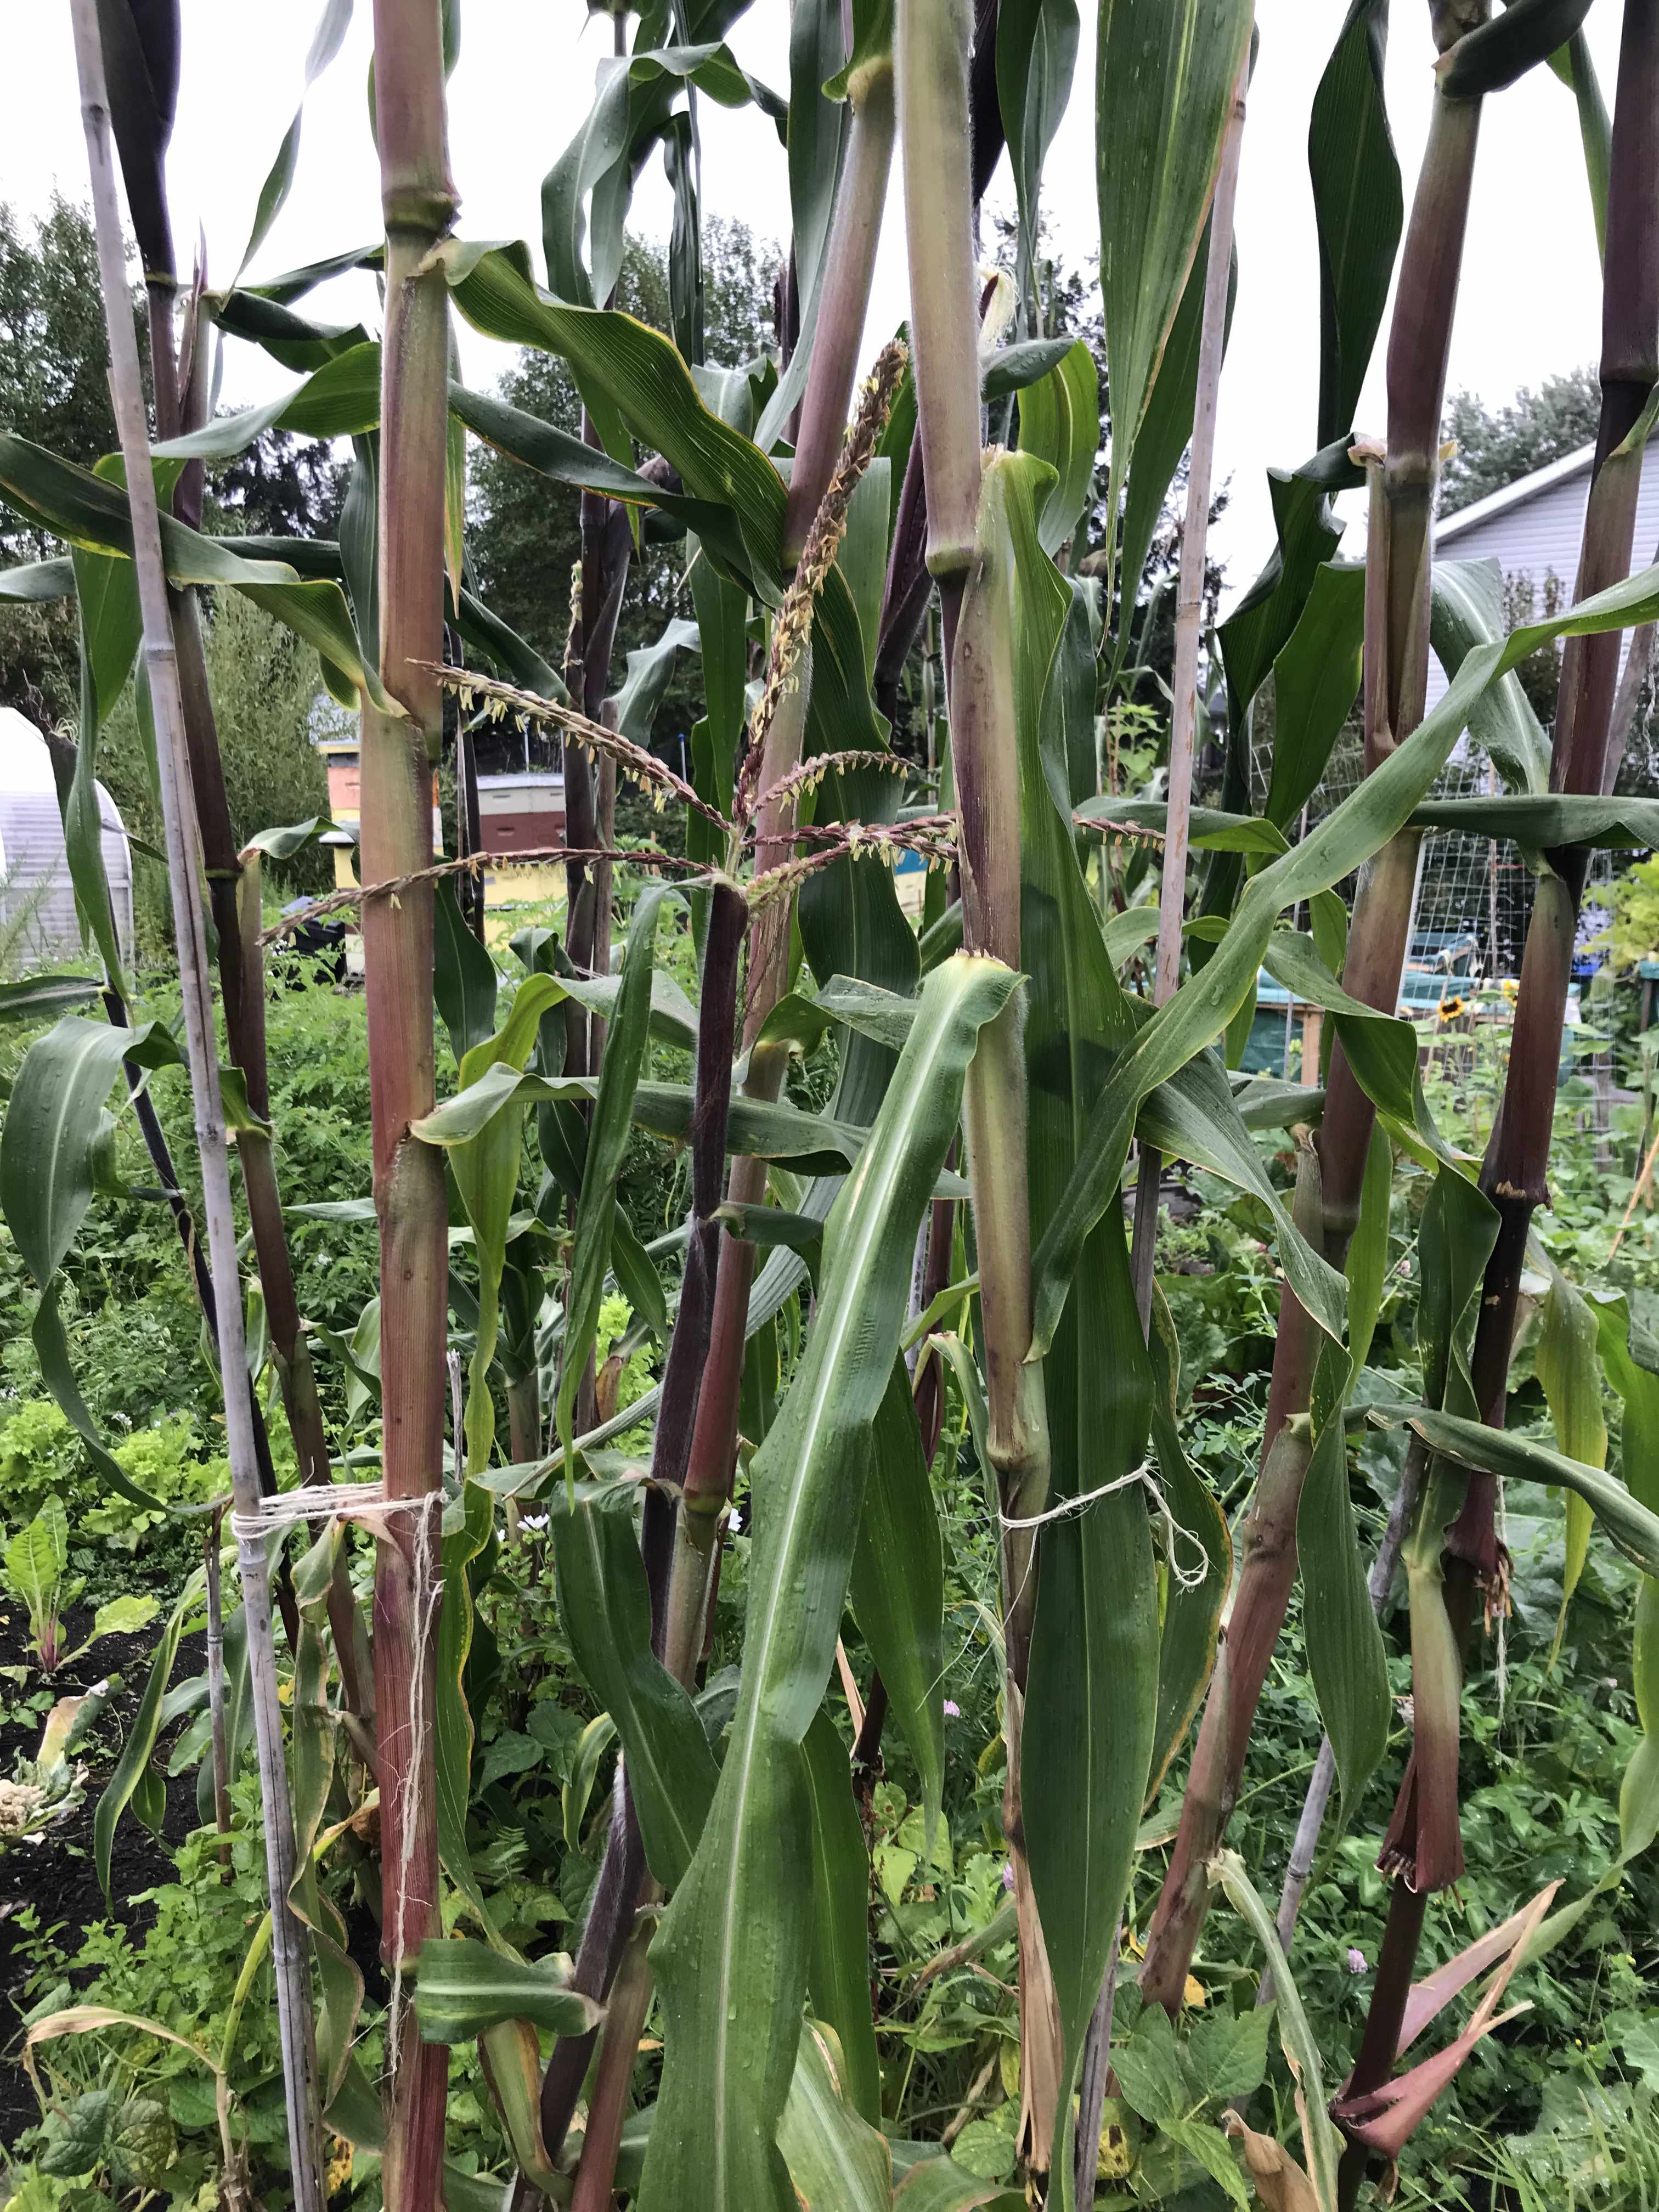 A closeup image of corn stalks